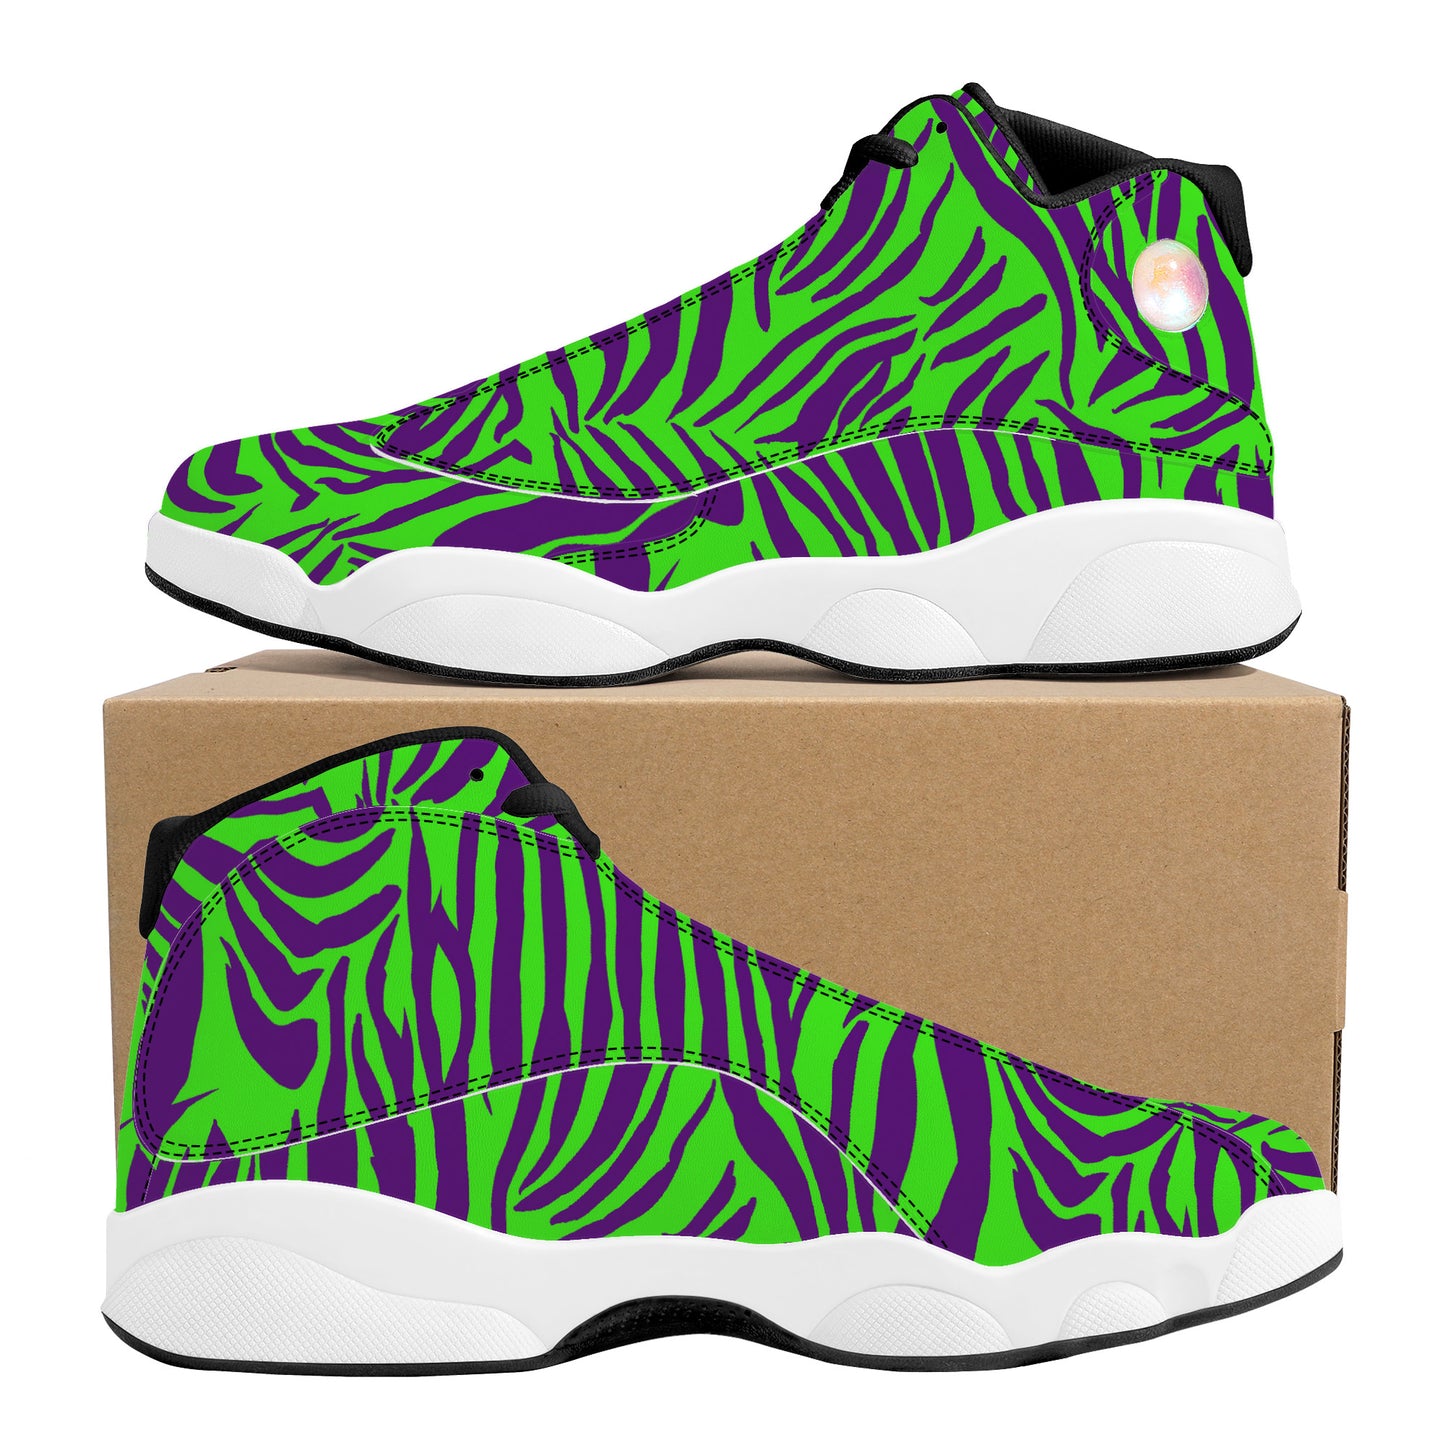 "Zebra" Basketball Shoes